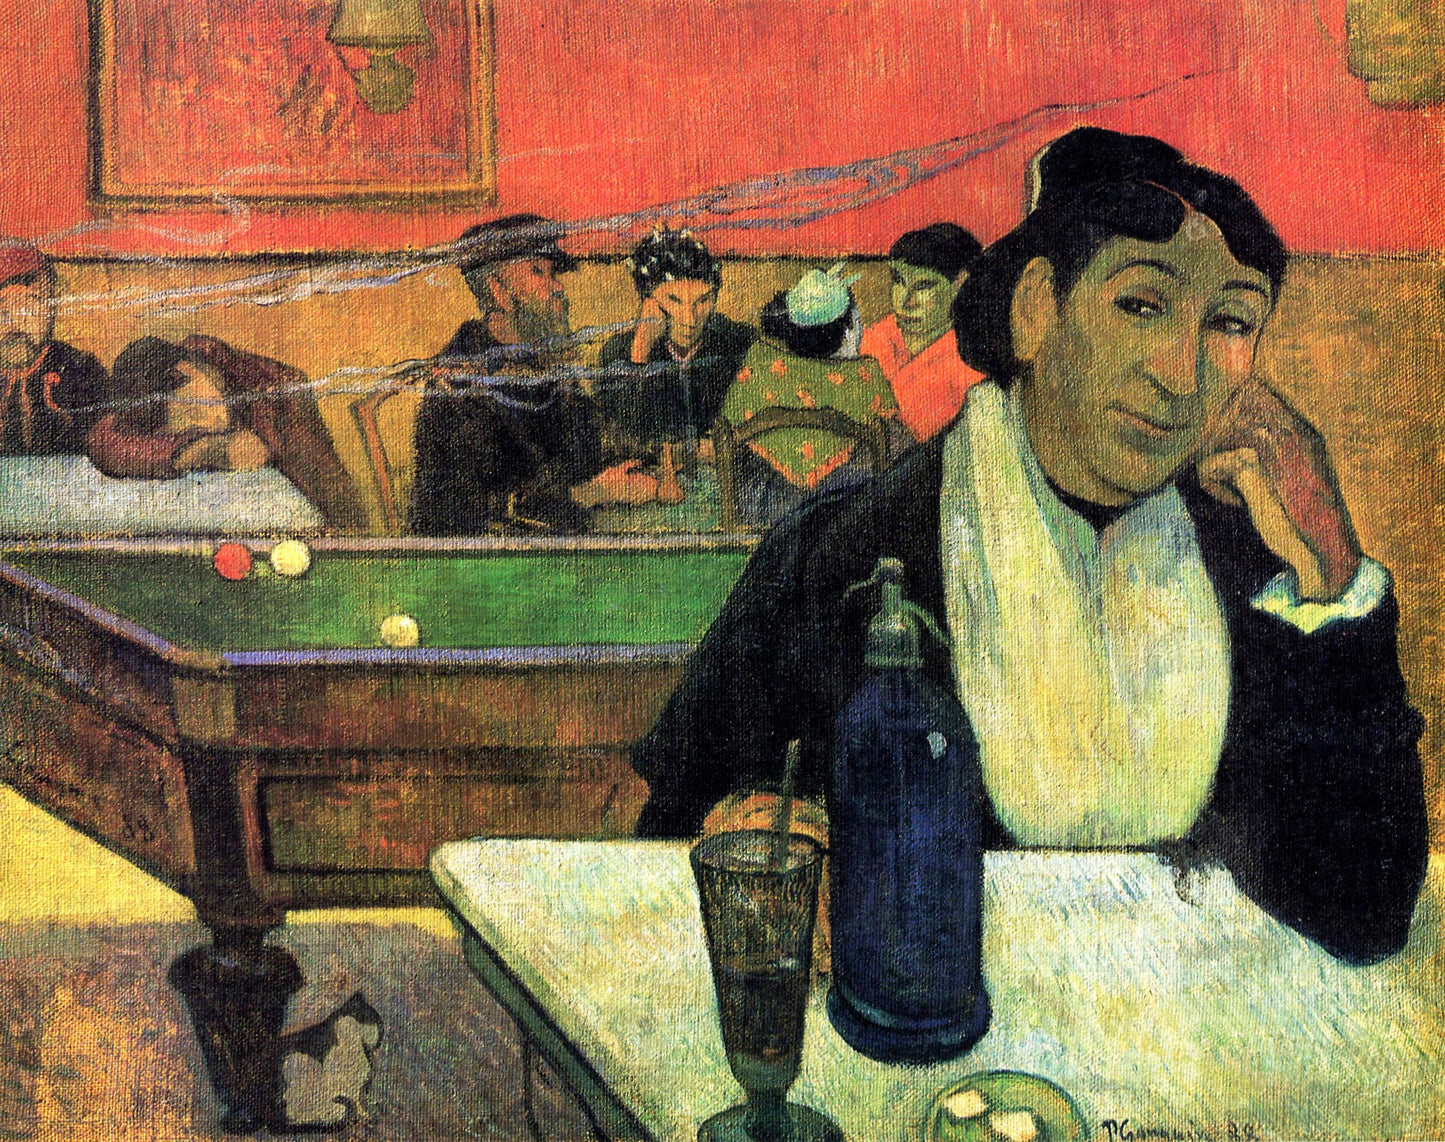 Paul Gauguin Post Impressionist Paintings Set 3 [33 Images]